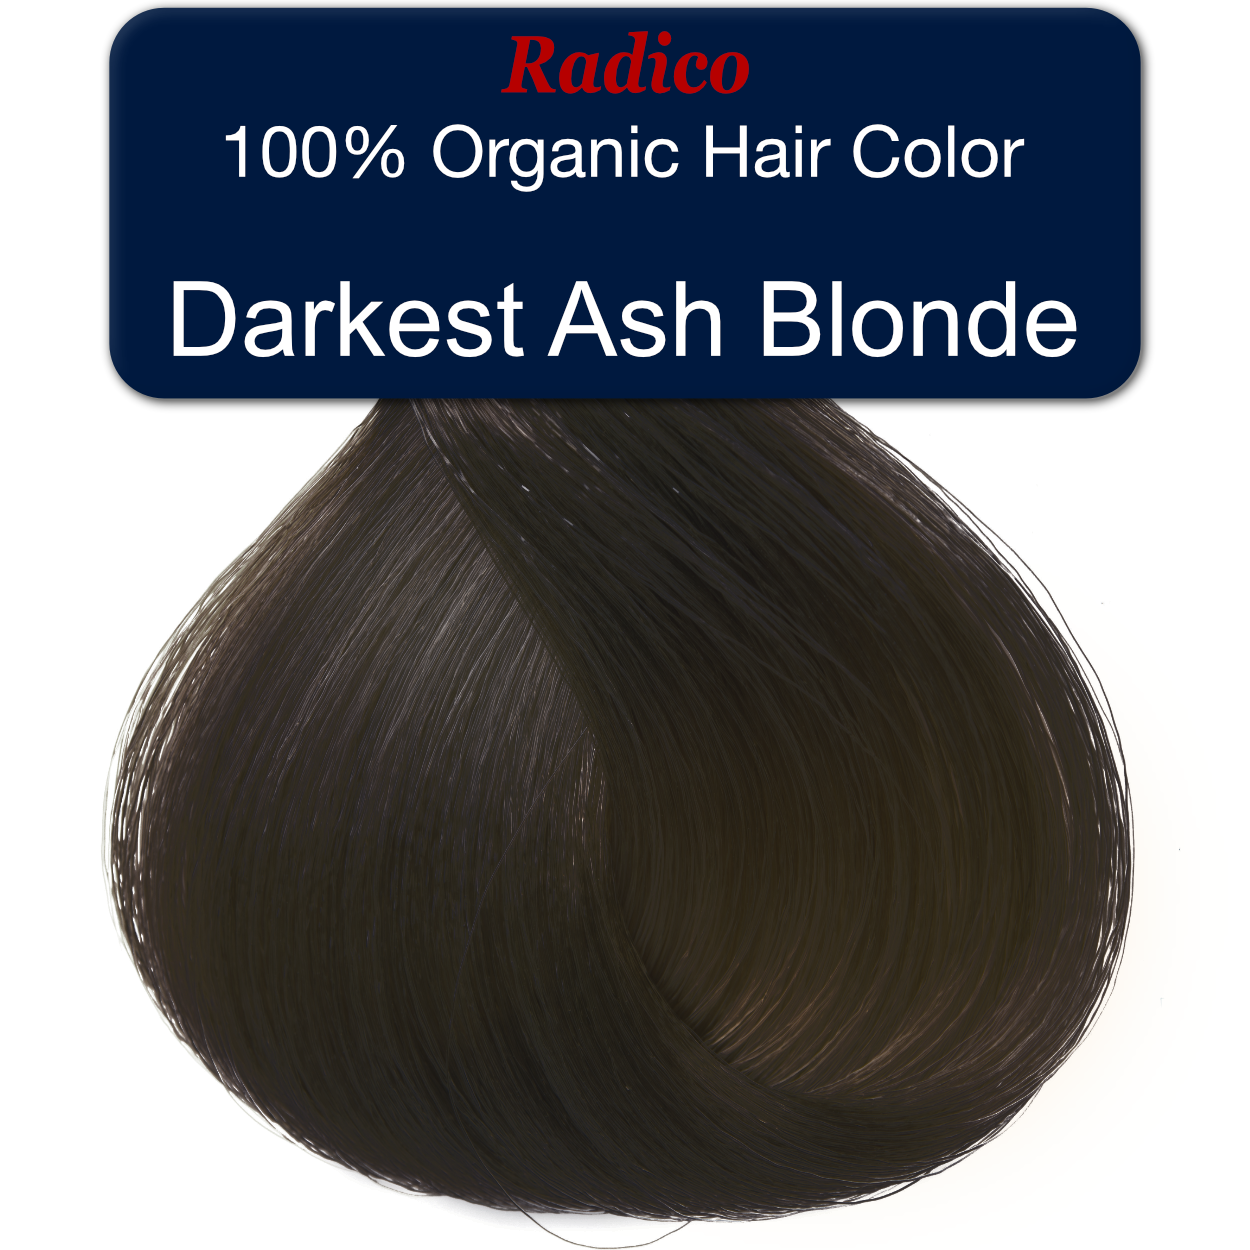 100% organic hair color. Darkest ash blonde hair color sample.